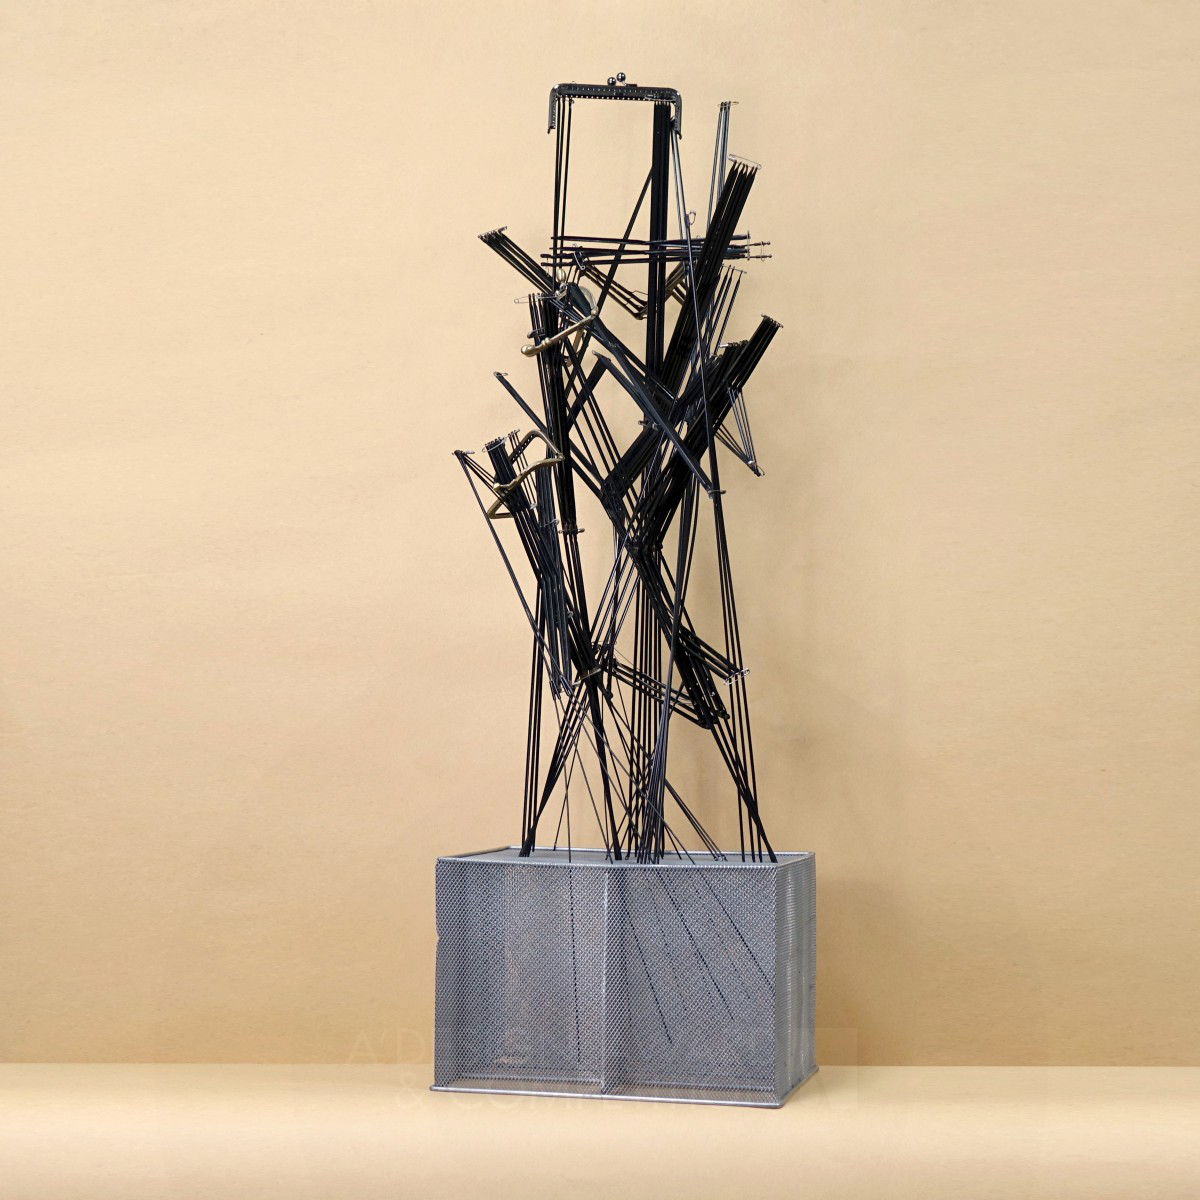 Umbrella Earth Thematic Installation by Naai-Jung Shih Iron Fine Arts and Art Installation Design Award Winner 2019 